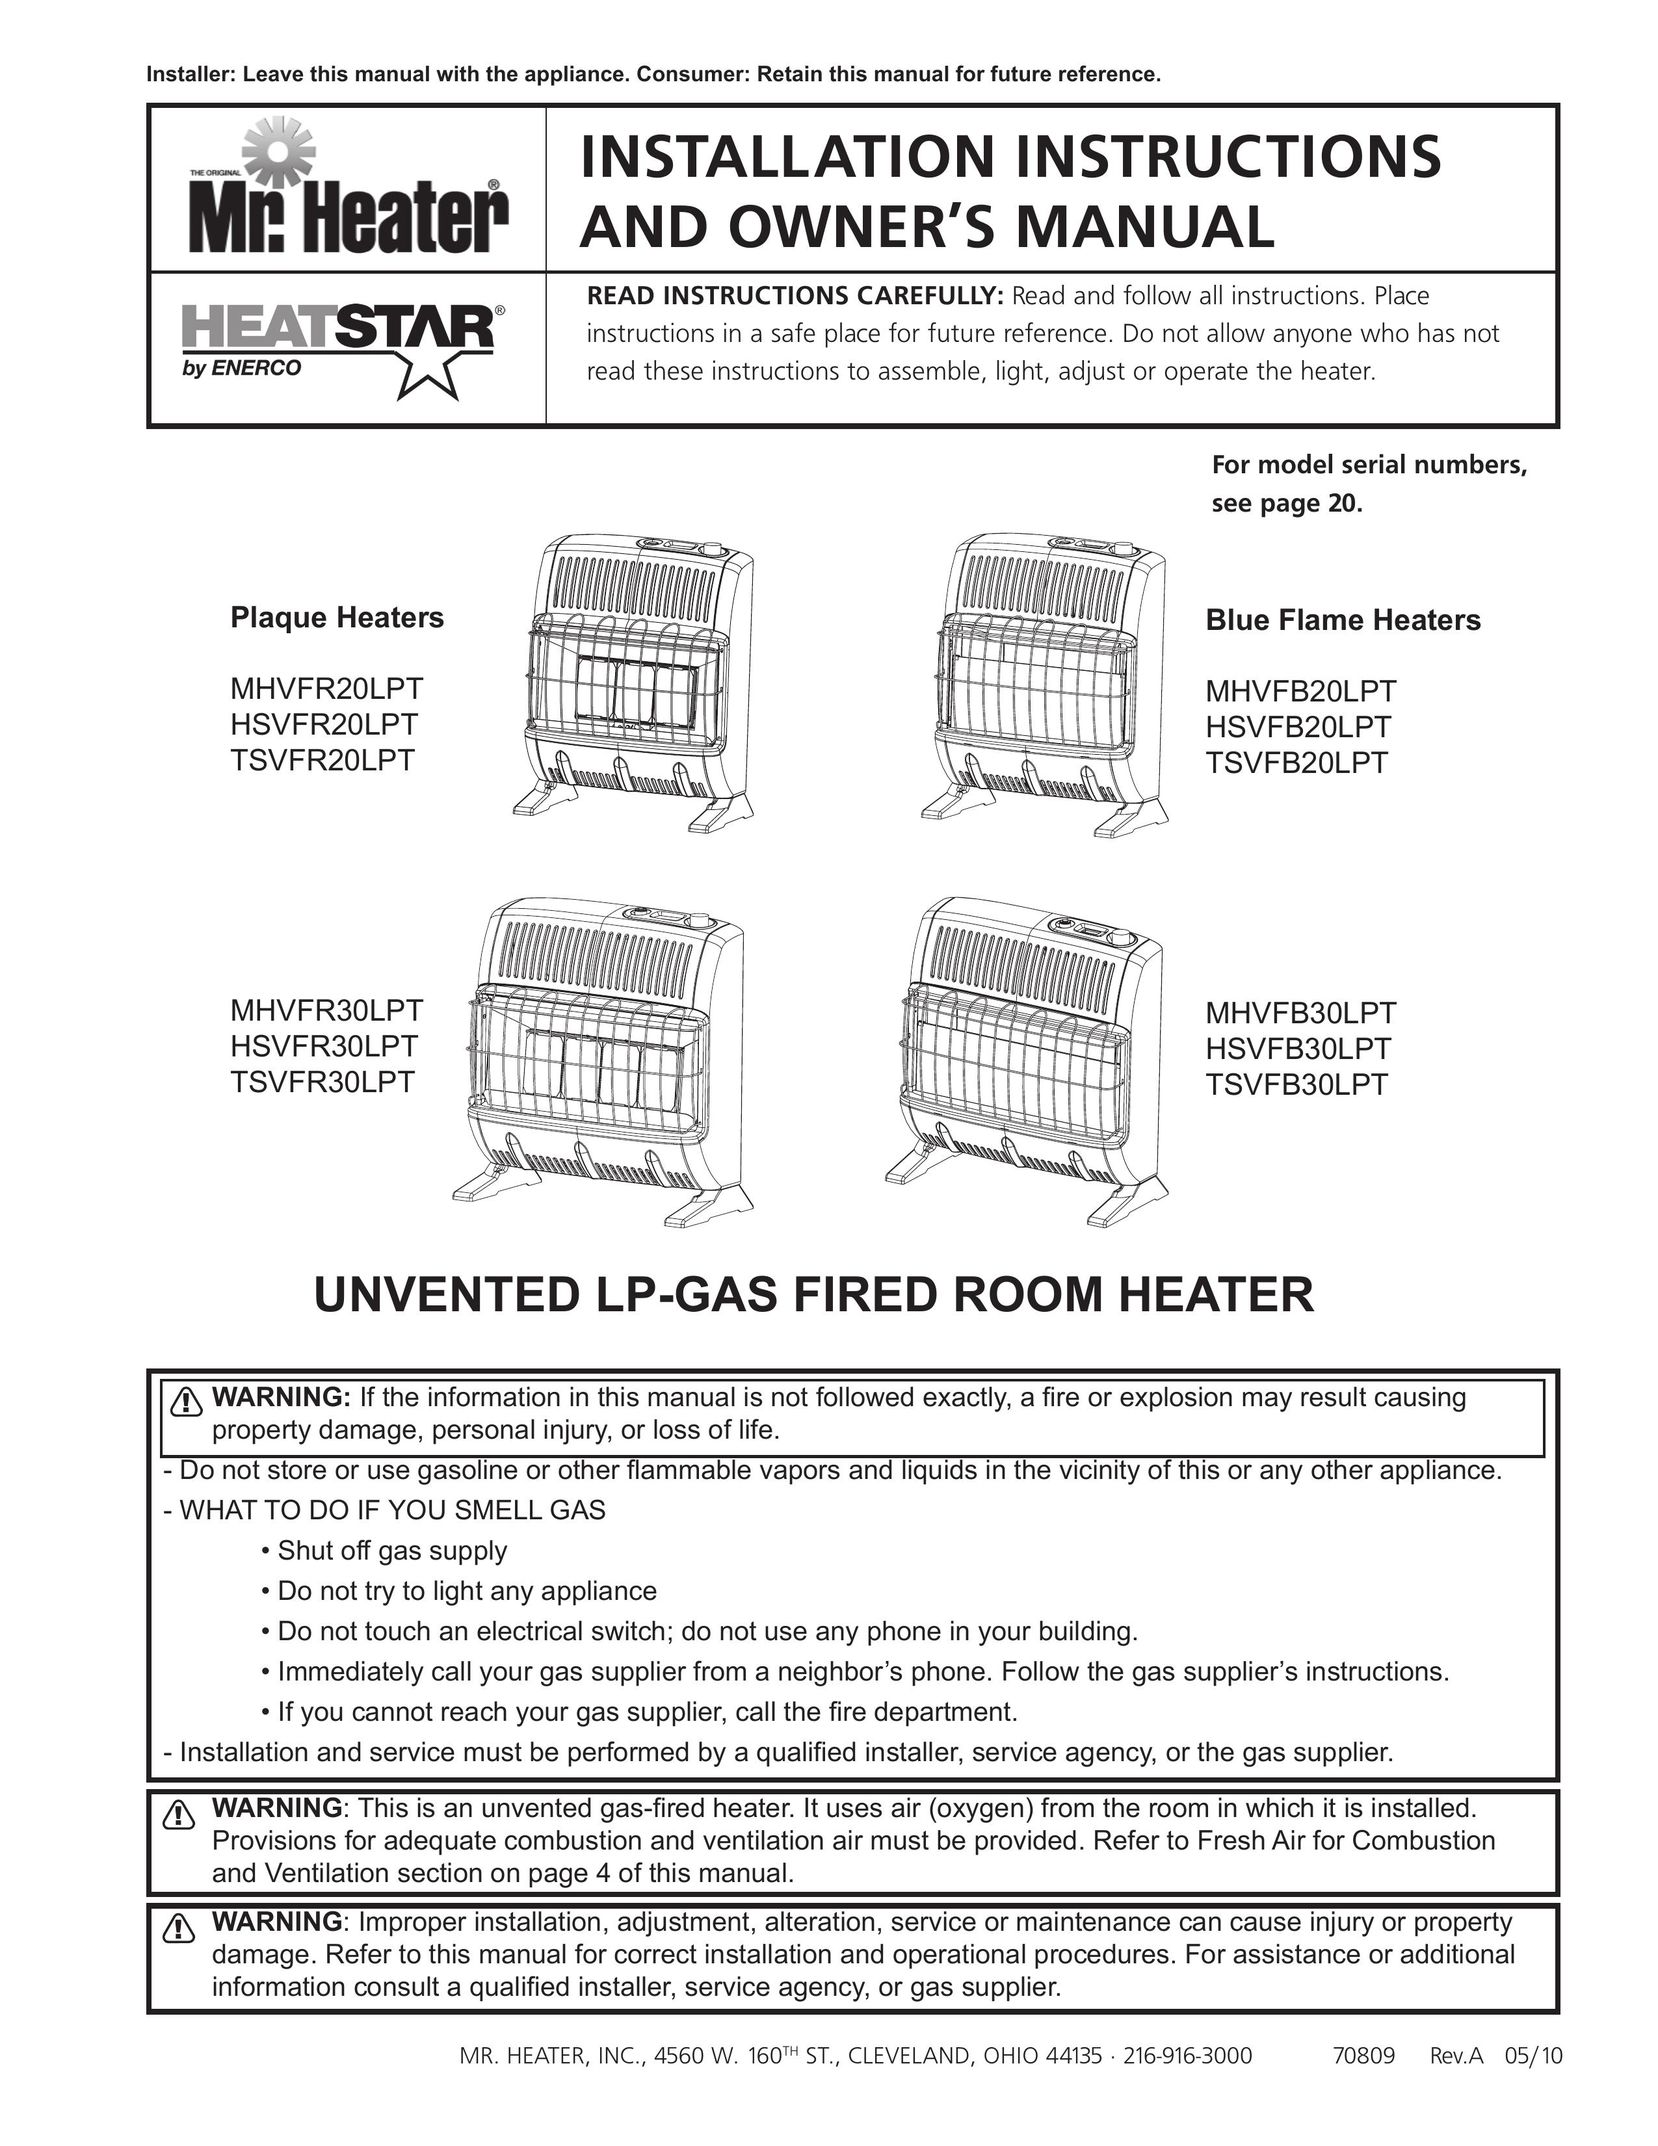 Enerco MHVFB30LPT Gas Heater User Manual